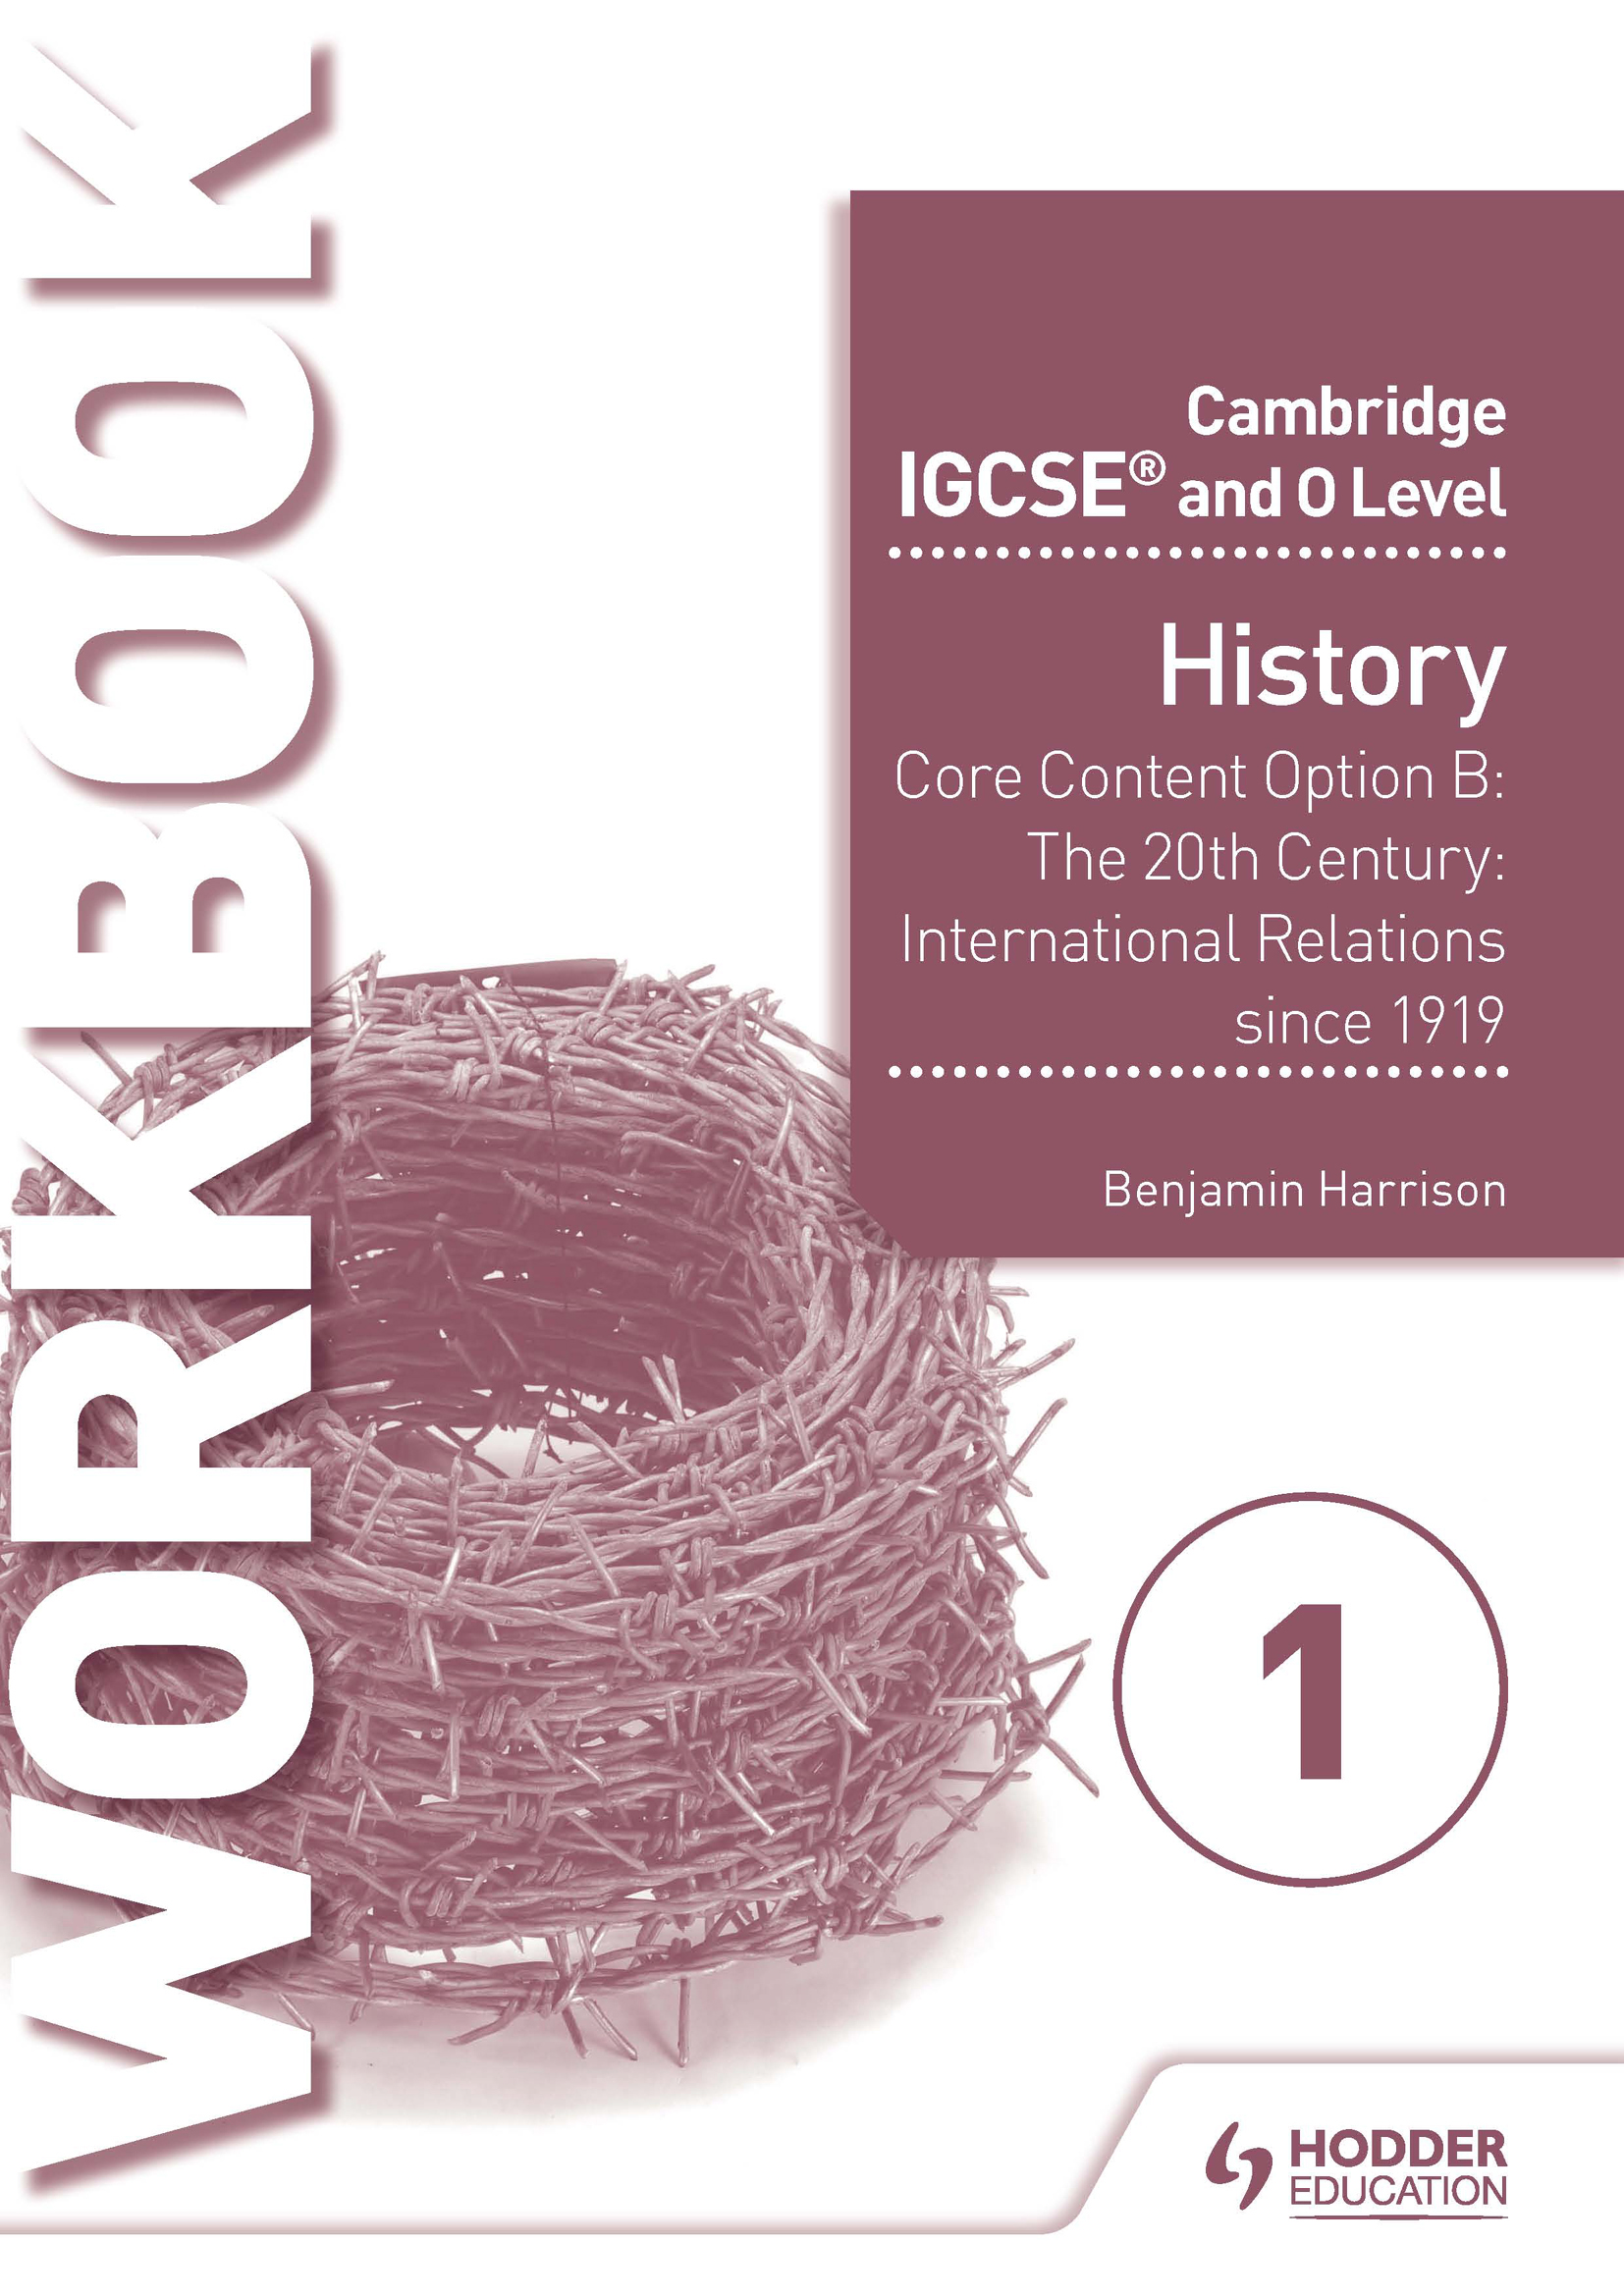 cambridge igcse history coursework examples